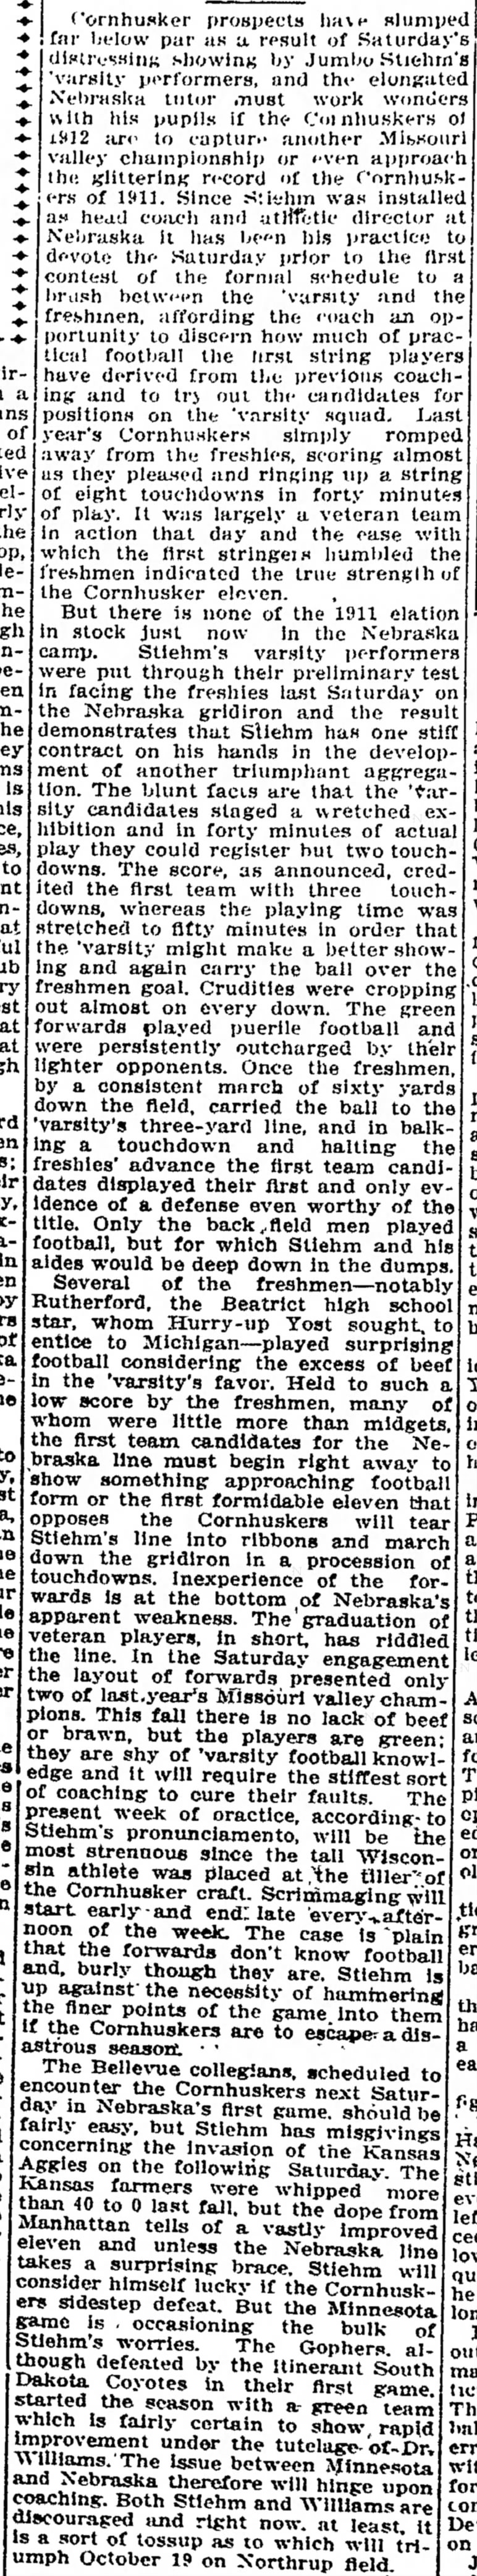 1912 varsity-freshmen scrimmage